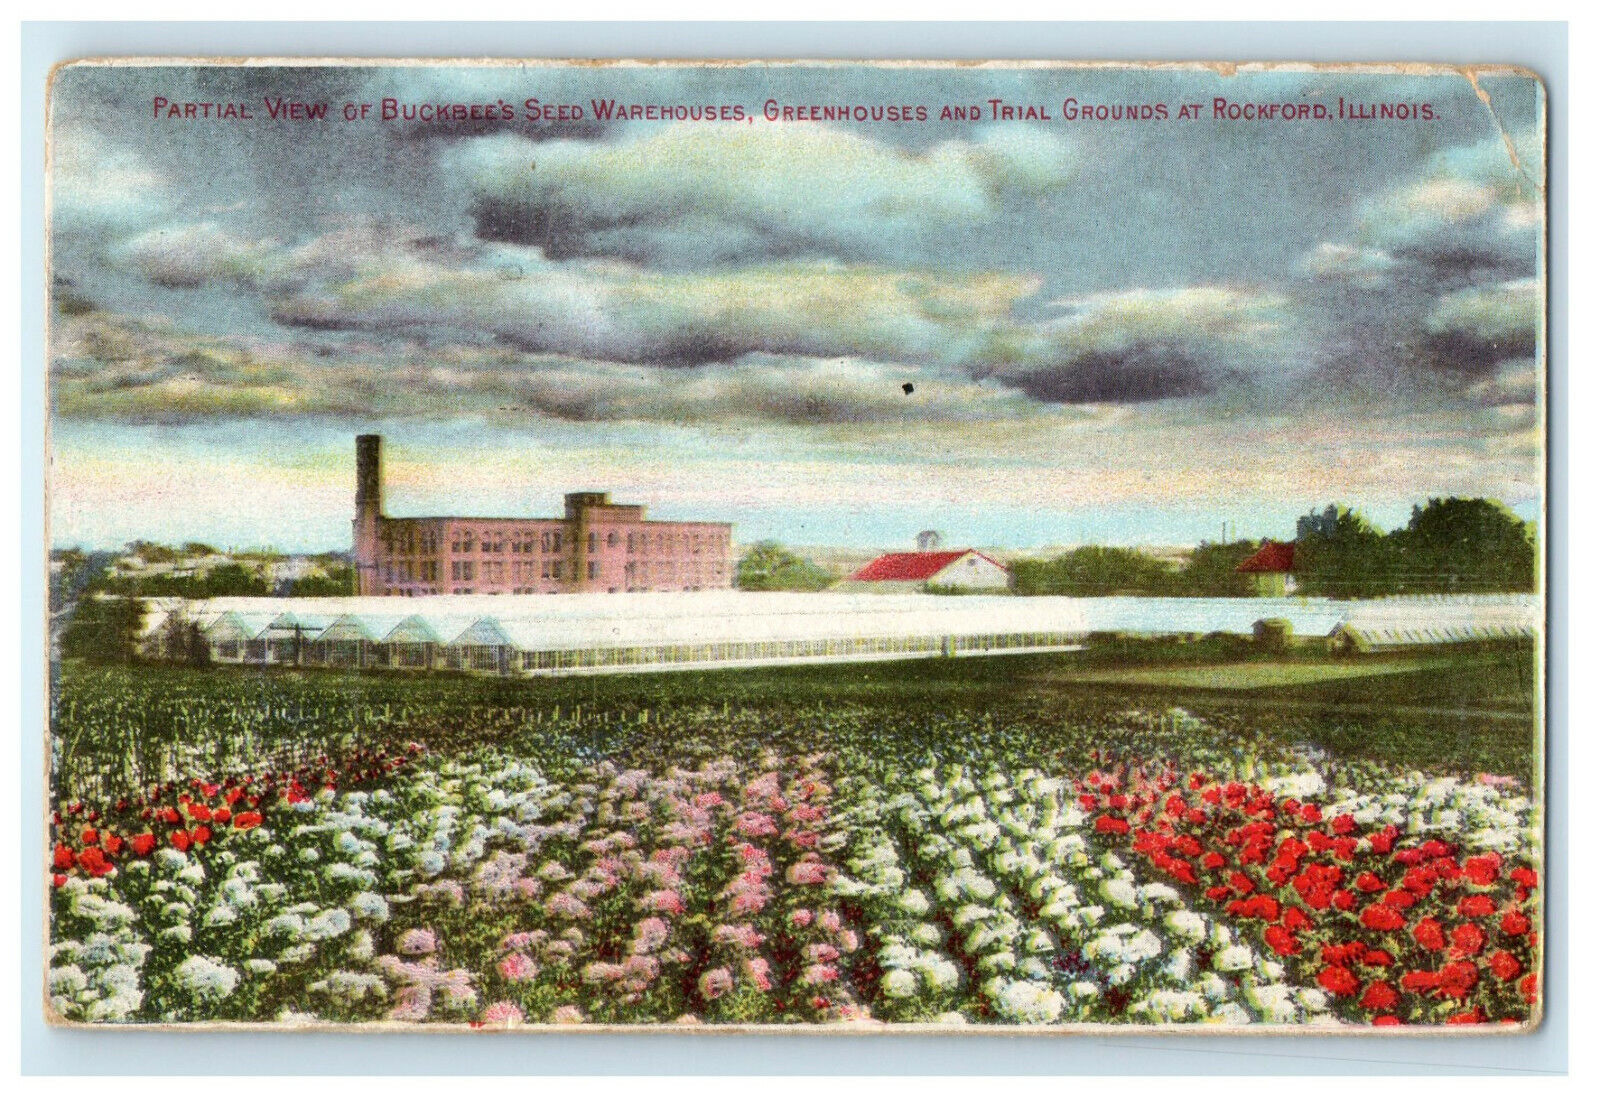 c1910s Buckbee's Seed Warehouses Rockford Illinois IL Advertising Postcard